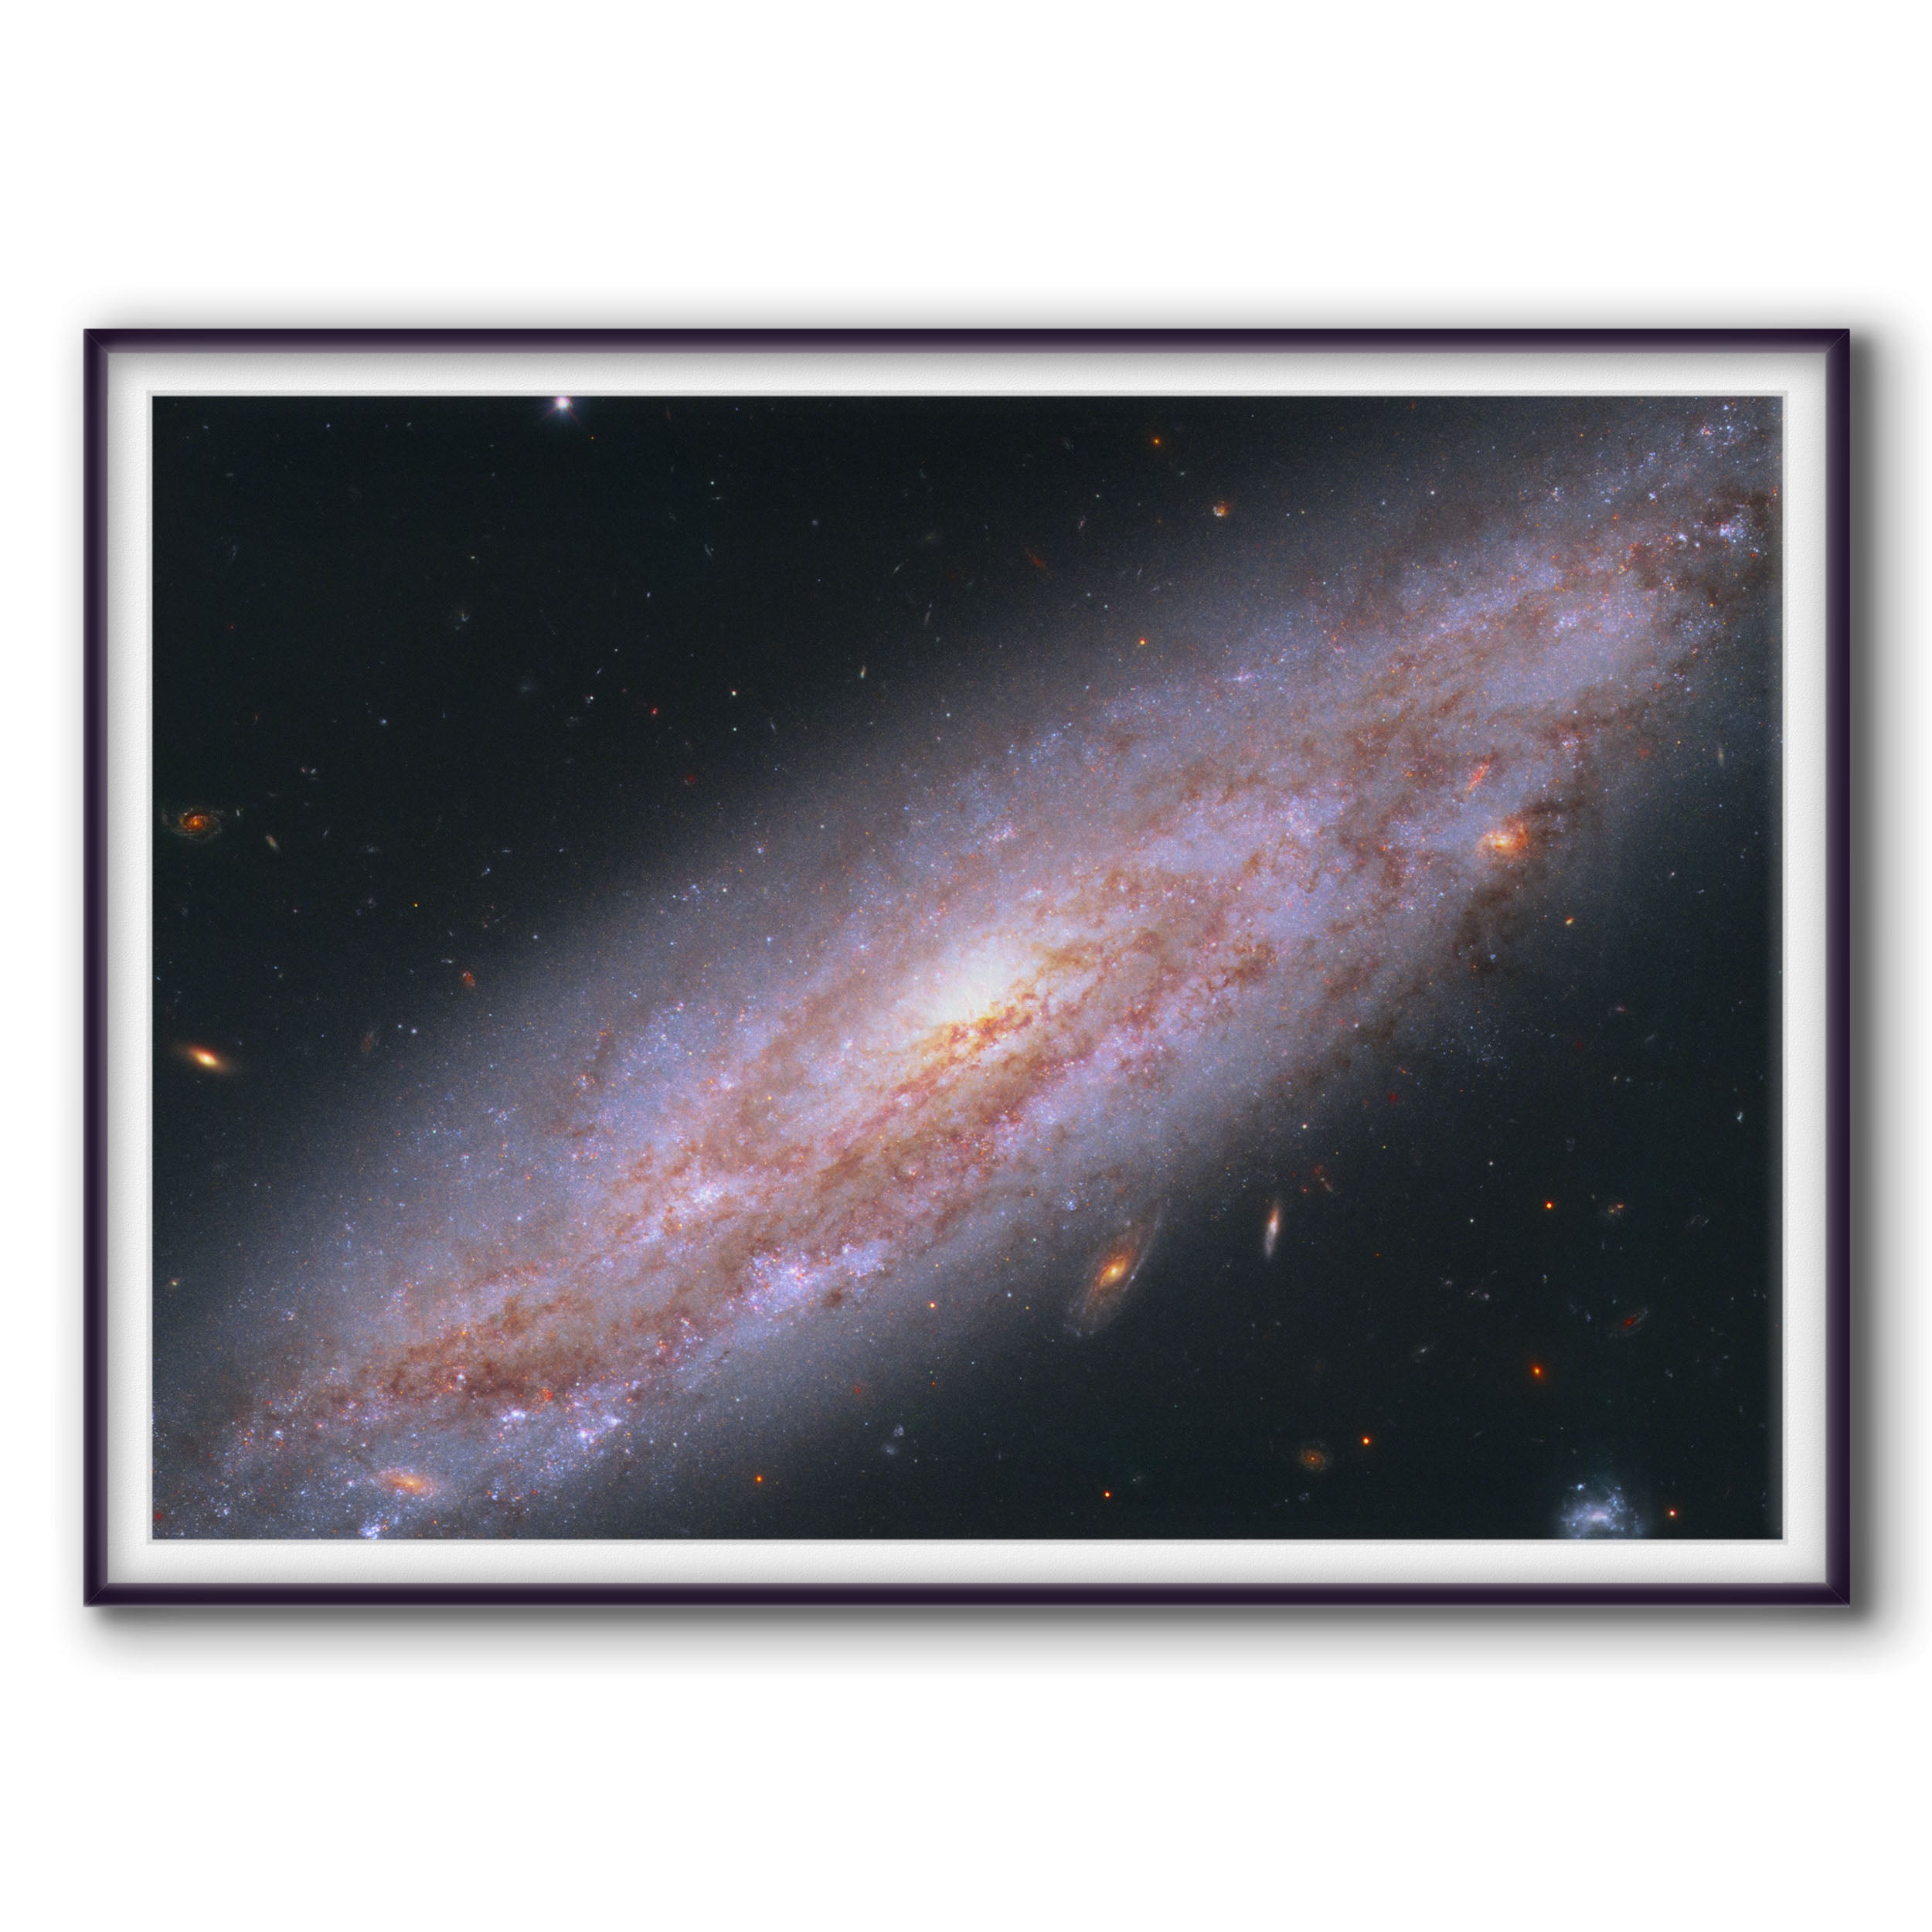 Andromeda w chmurach wodoru